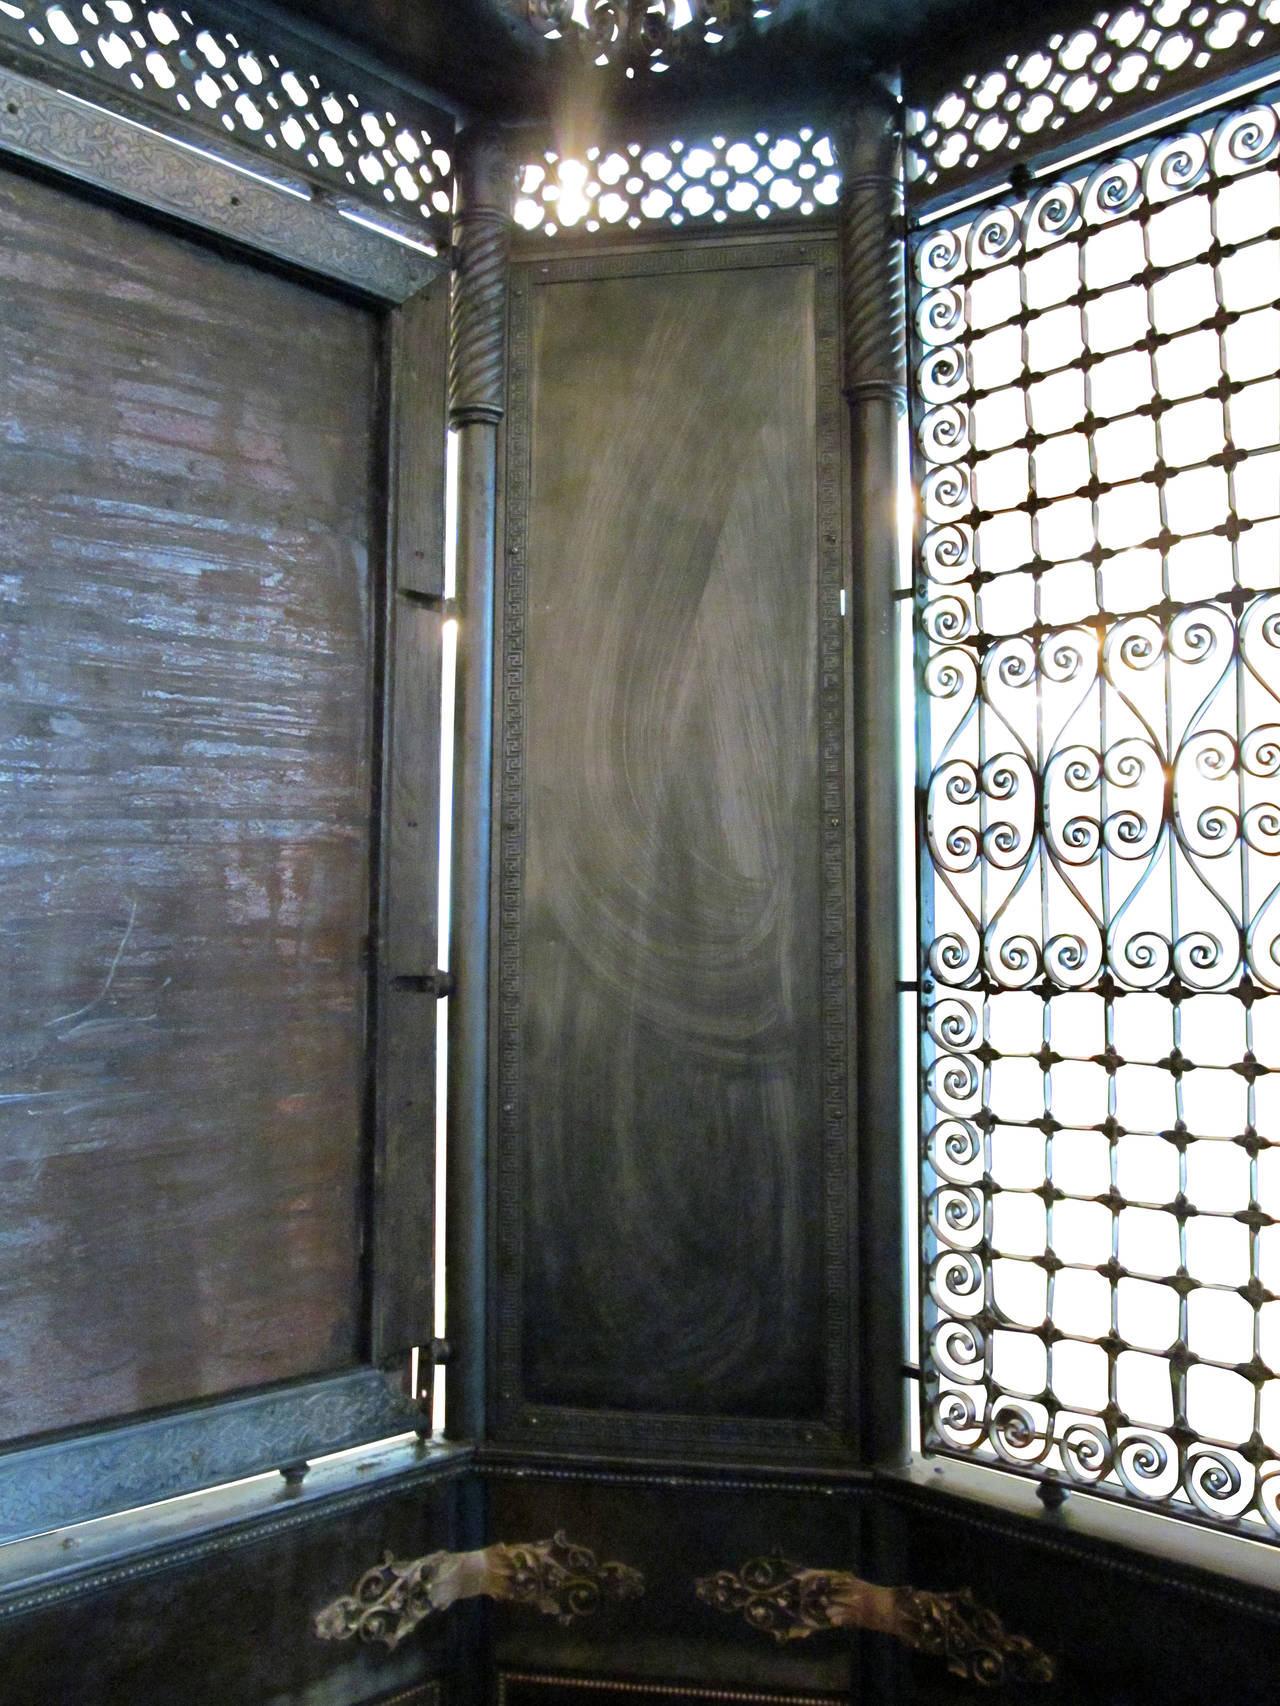 American Antique Otis Birdcage Elevator with Original Hardware, Finials and Scissor Doors